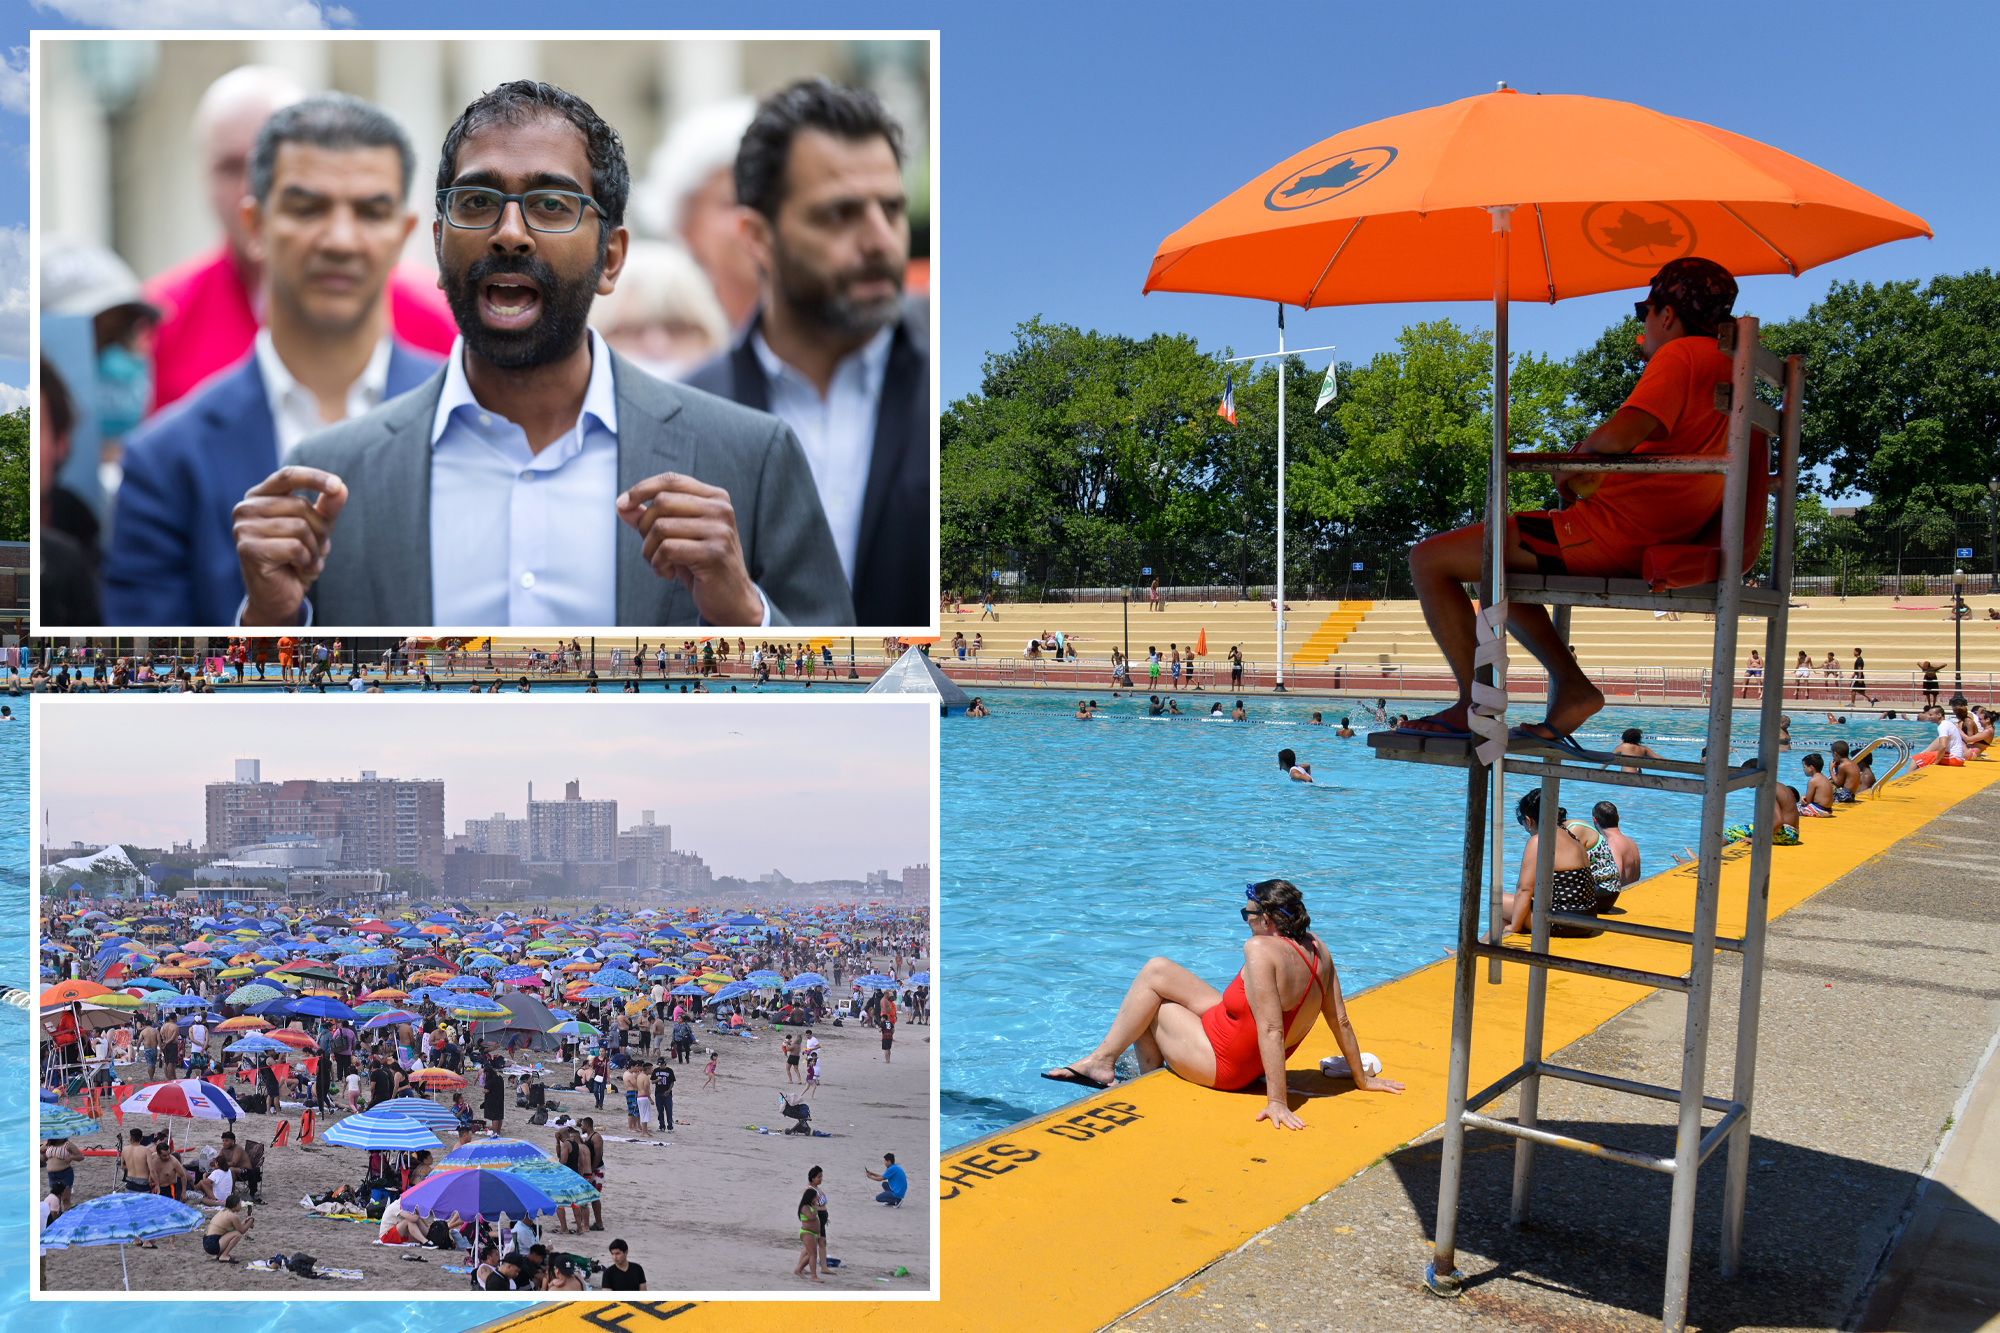 Councilman Shekar Krishnan; lifeguard at a pool; a crowded beach full of colorful umbrellas